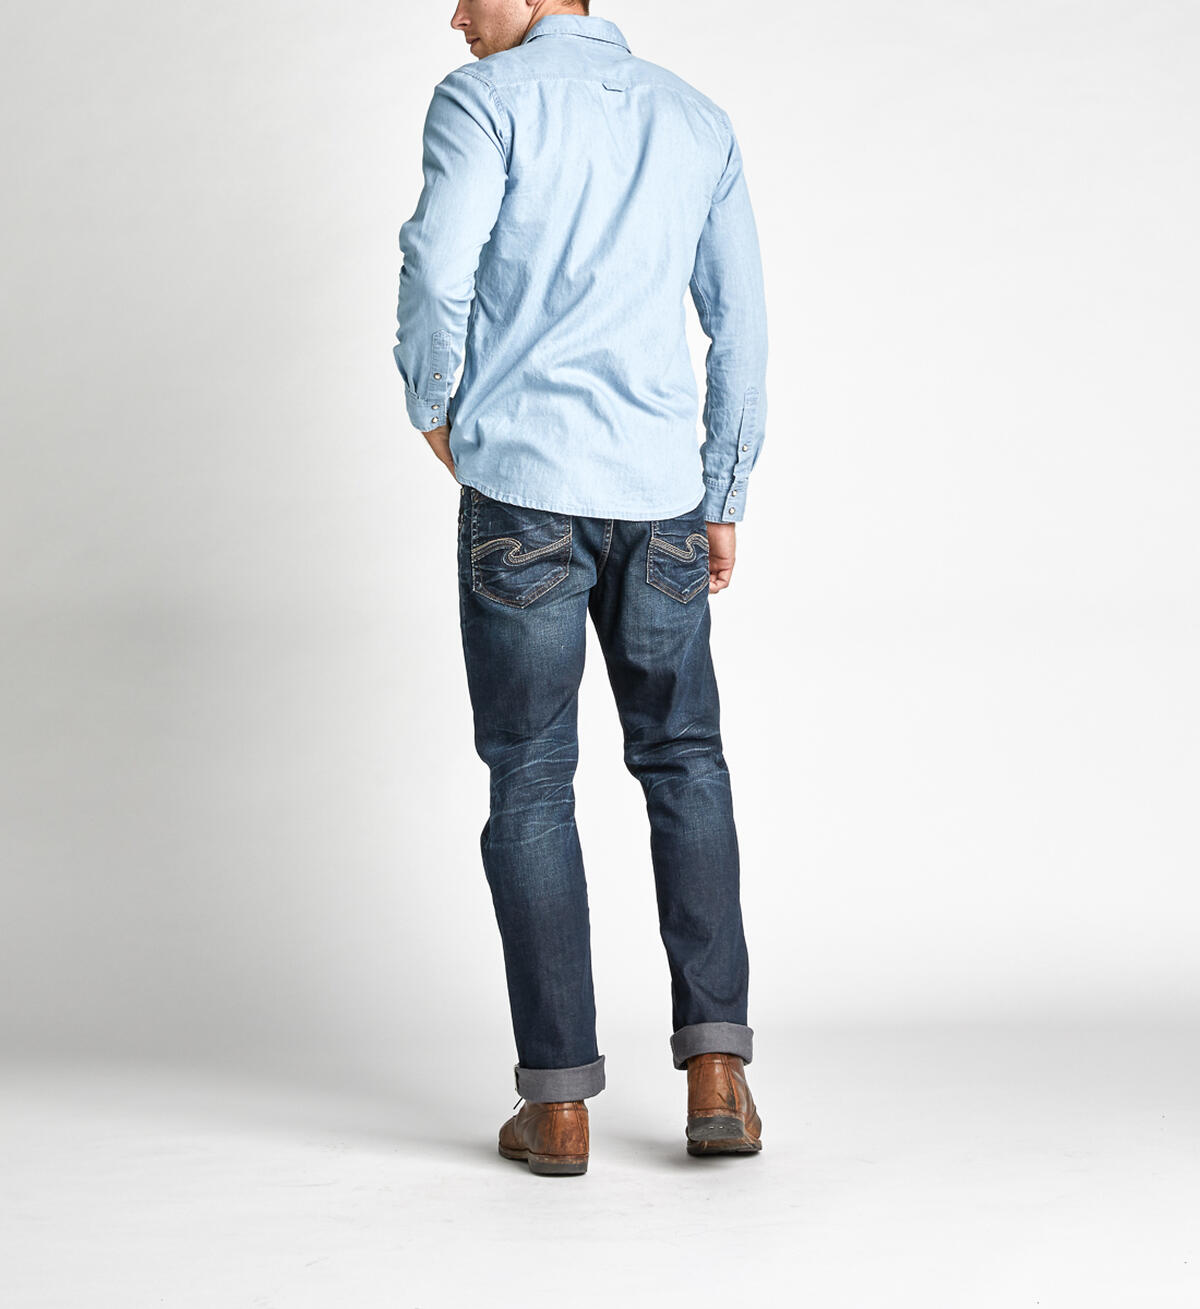 Calden Long-Sleeve Classic Shirt, , hi-res image number 2